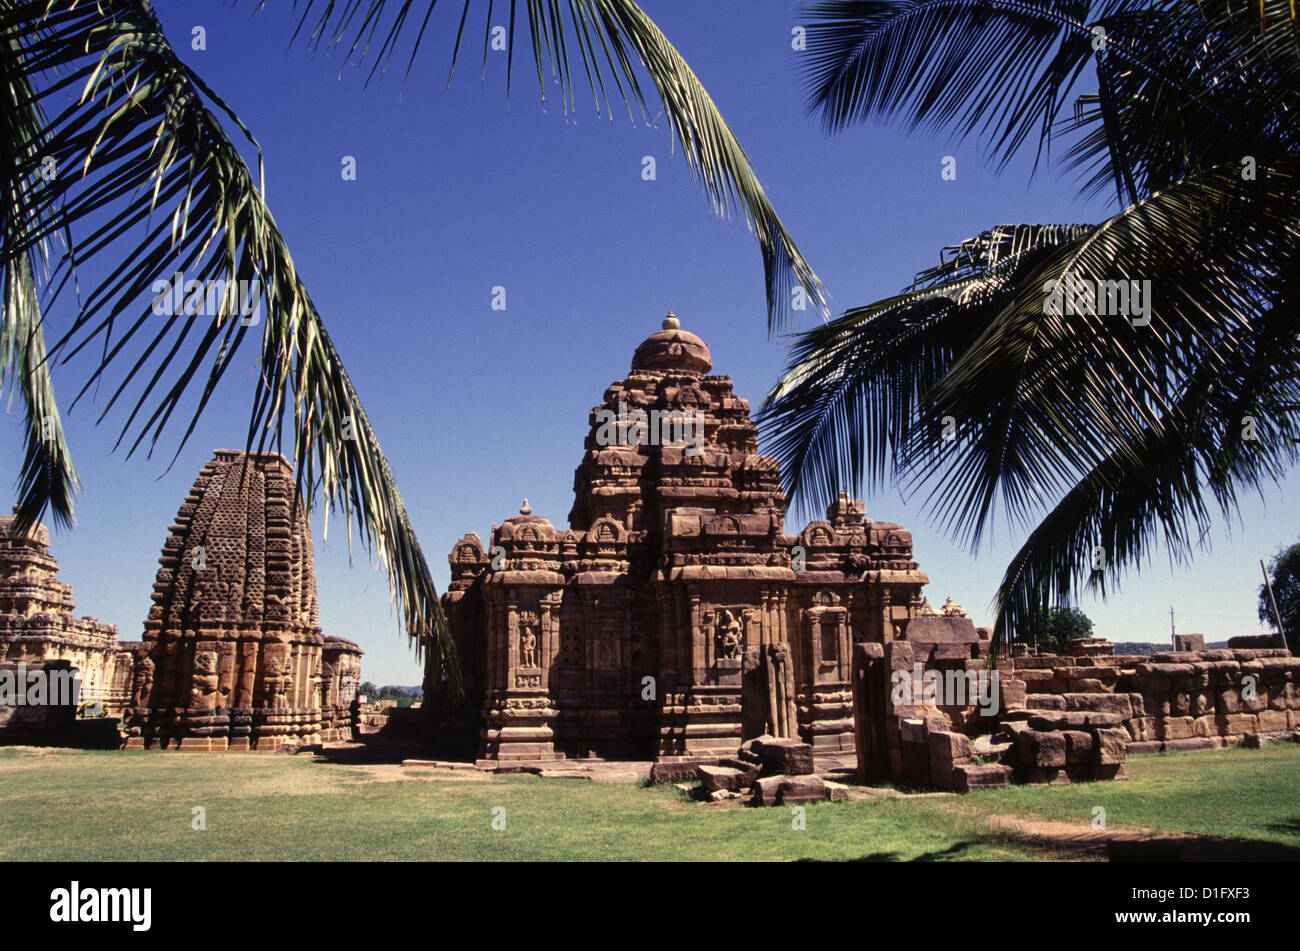 View of the Mallikarjuna temple in Dravidian style built by Vikramadiyta's second queen Trilokyamahadevi in 745 AD at Pattadakal, also spelled Paṭṭadakallu Group of monuments in Karnataka state India Stock Photo